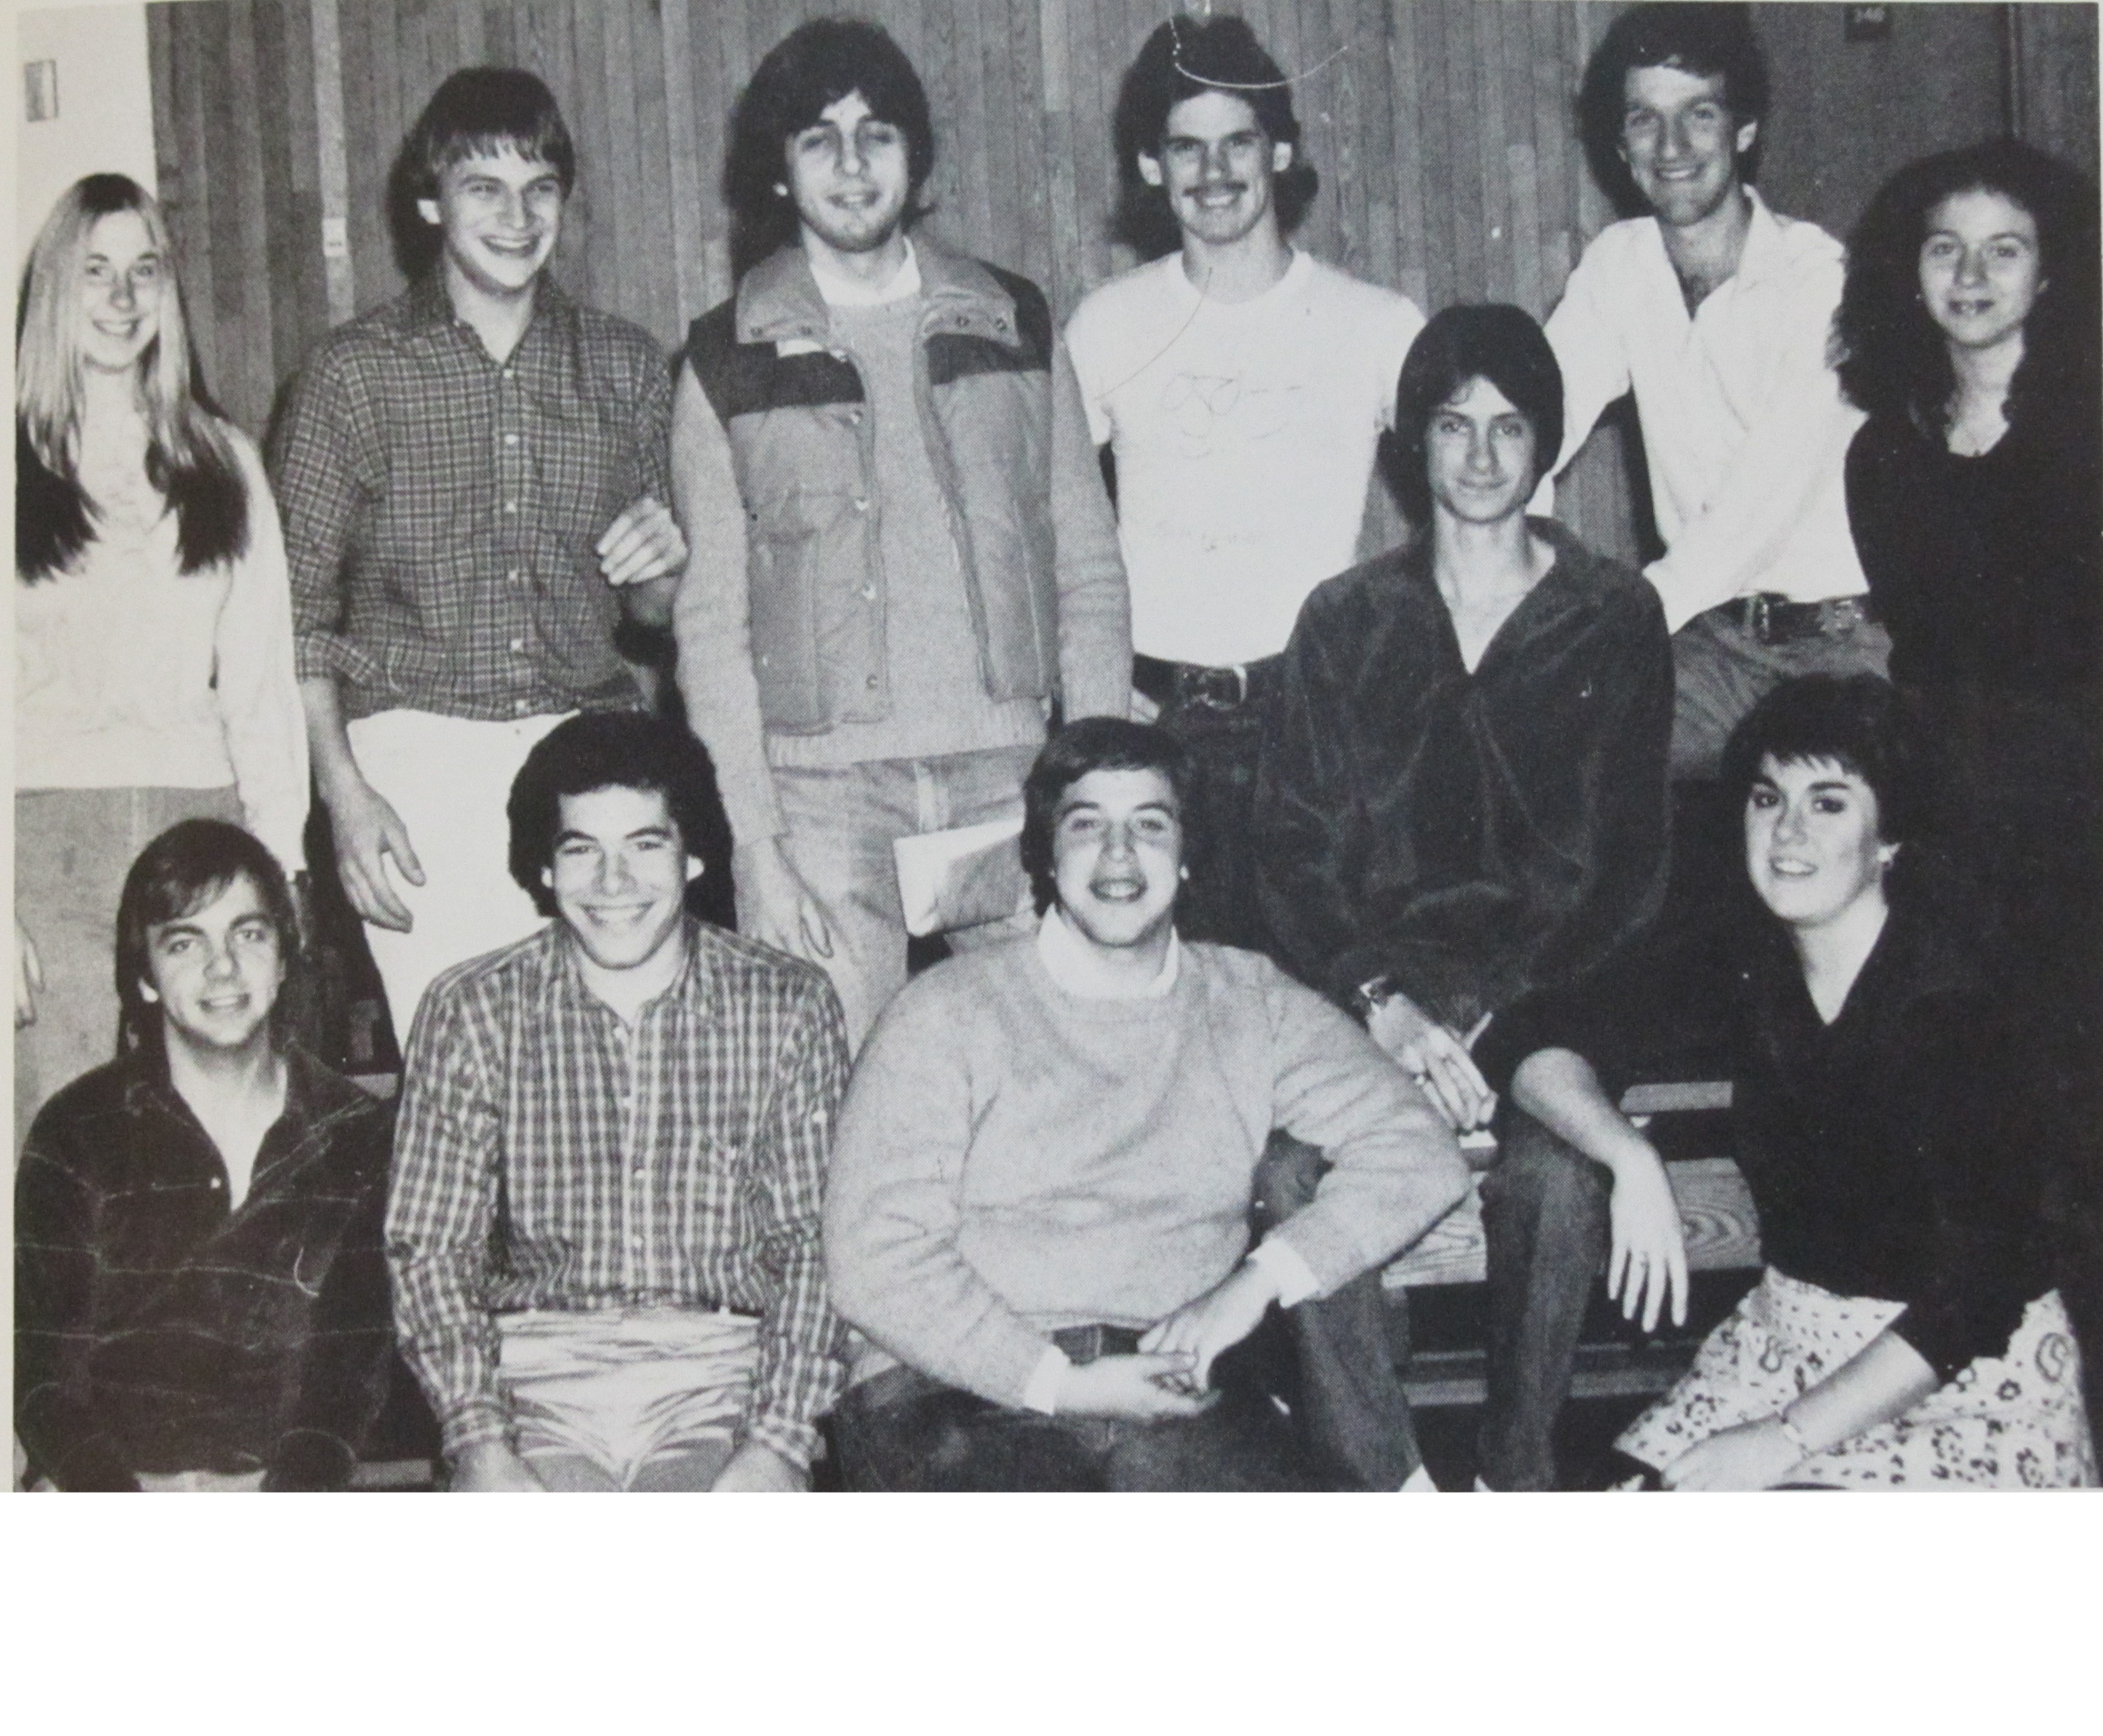 1982 - Left to Right:Sherry Schweighardt, Steve Maffie, Unknown, Tim Jackson, Unknown, Jim Berman, Judiaka Illis Steve Carter, Unknown, Jon Newman, Rose Mahoney